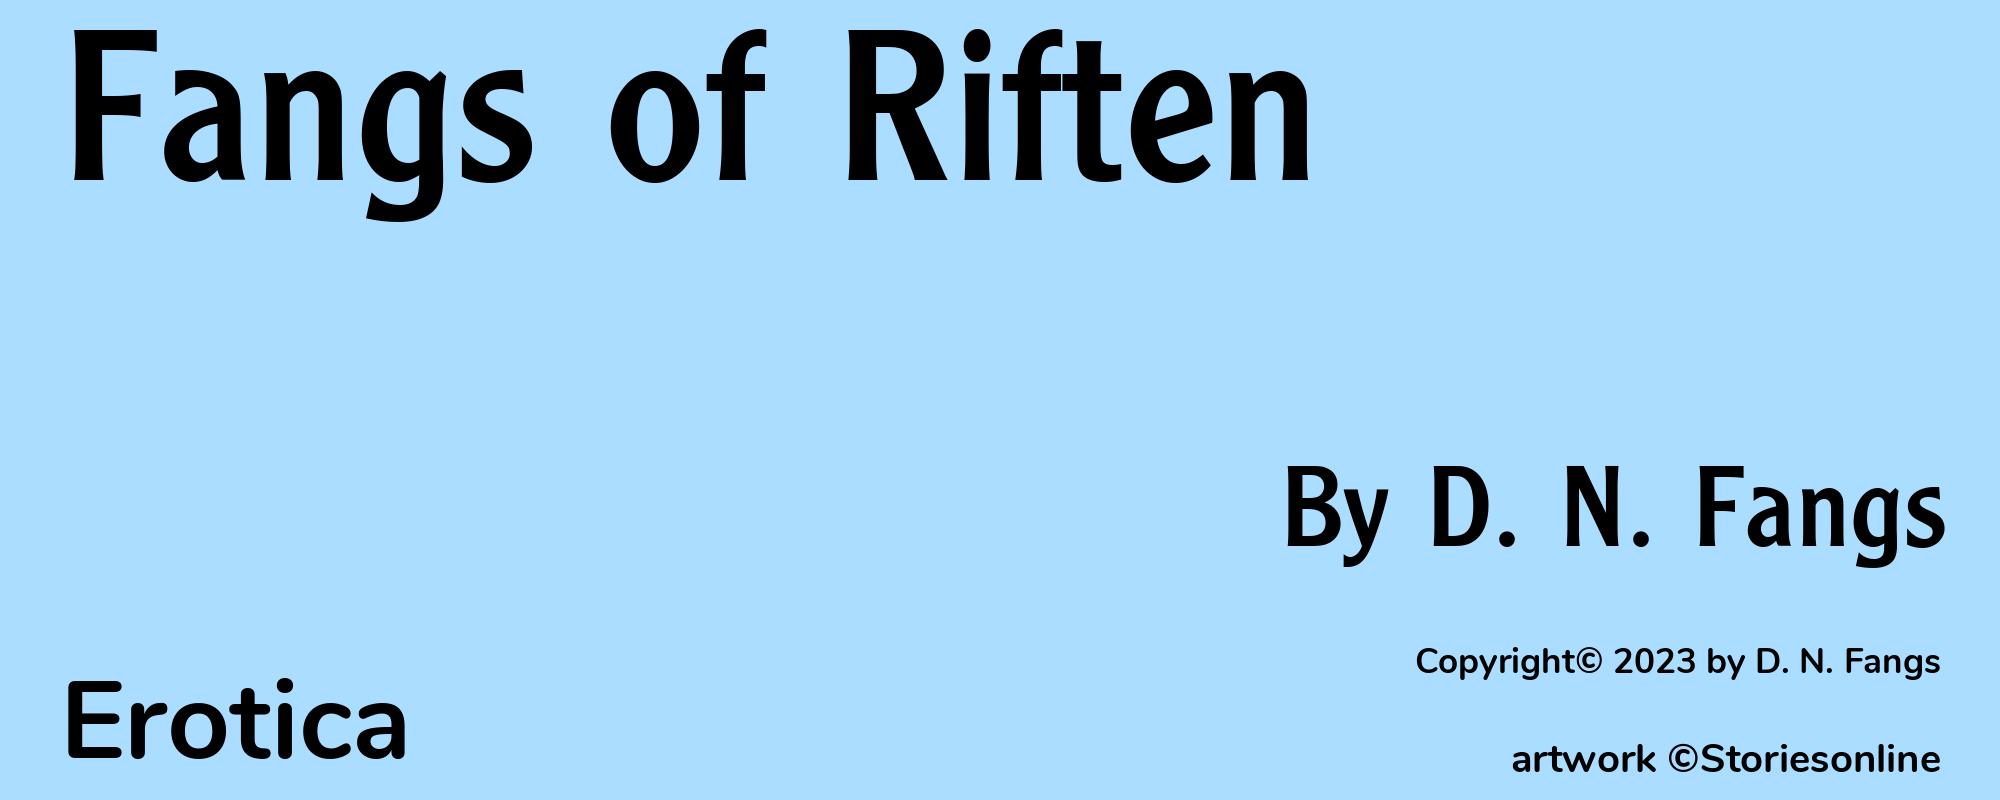 Fangs of Riften - Cover